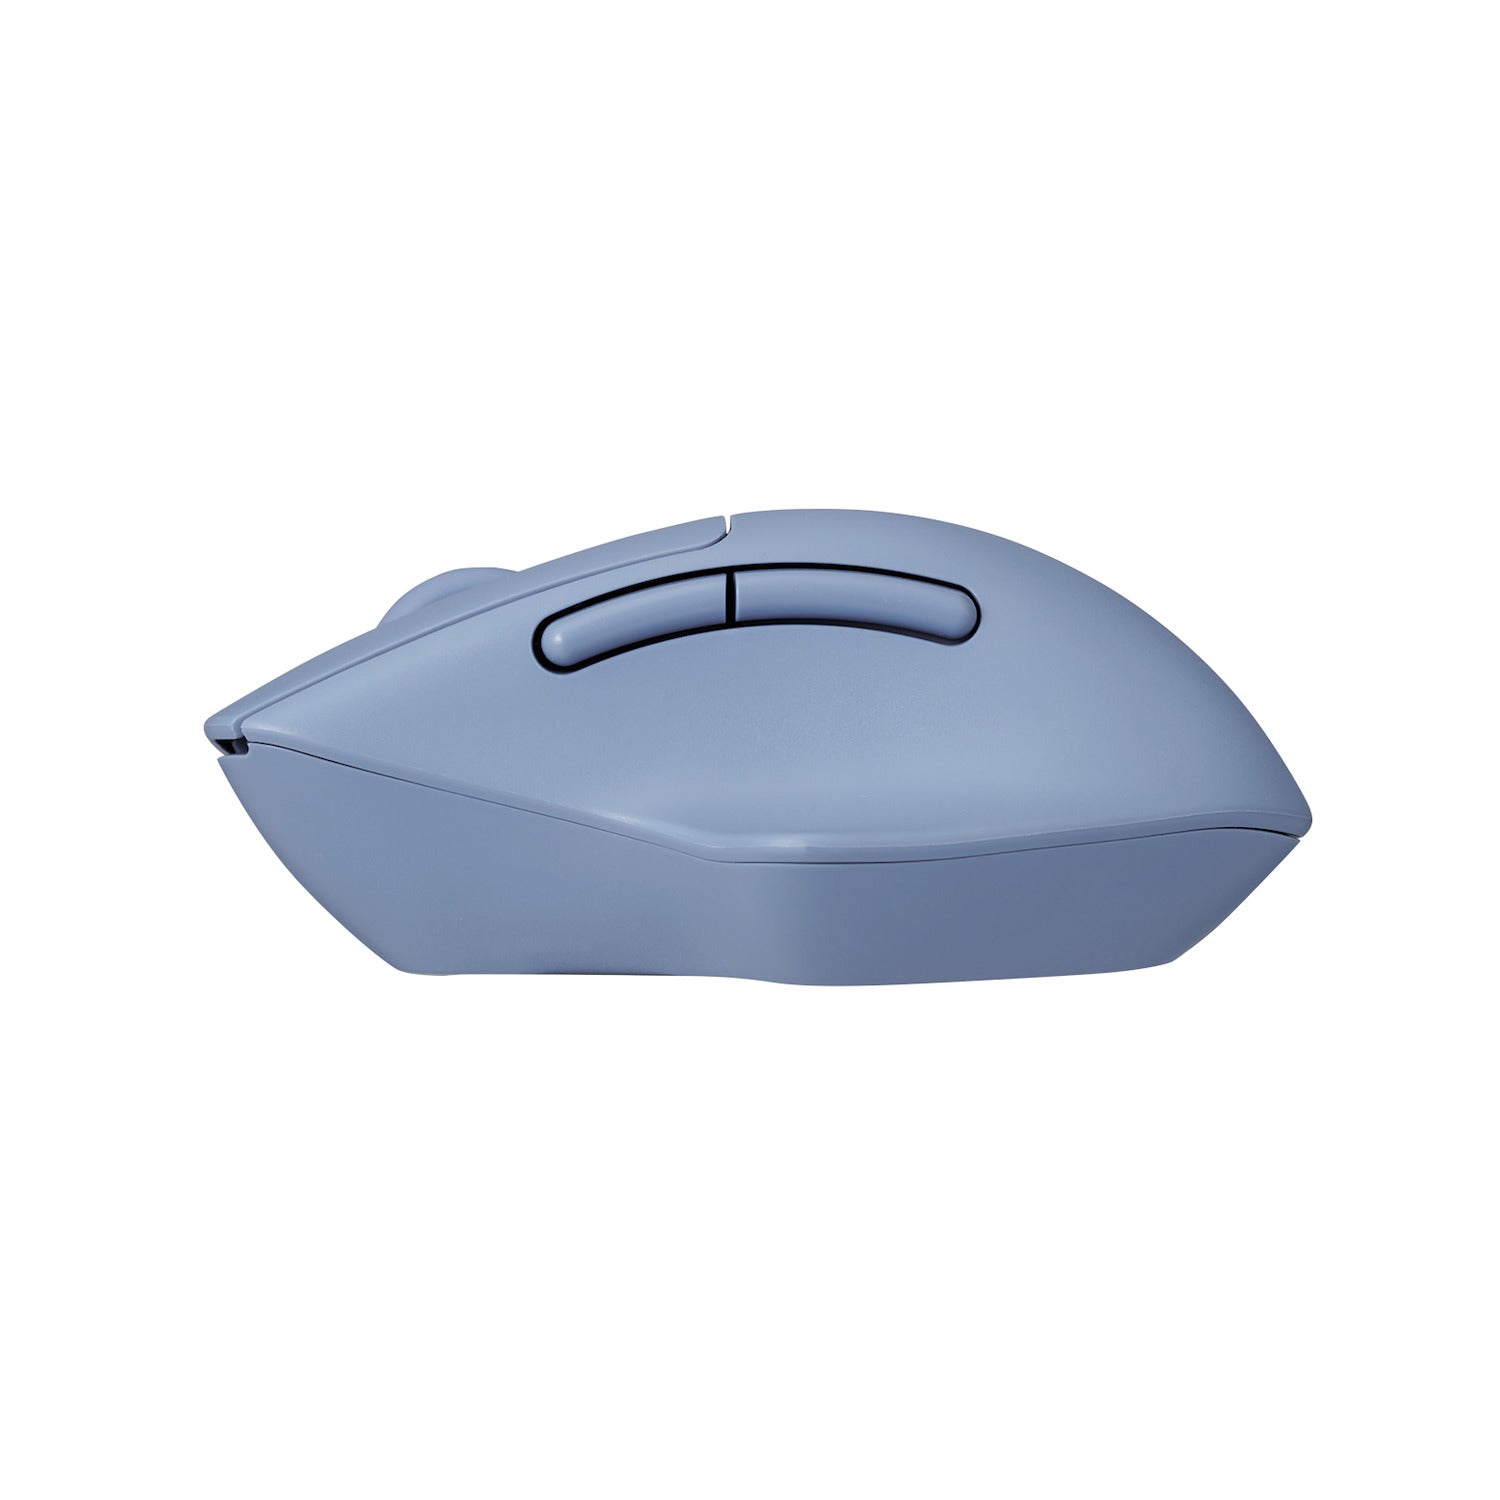 SH30 Ergonomic Mouse - Wireless